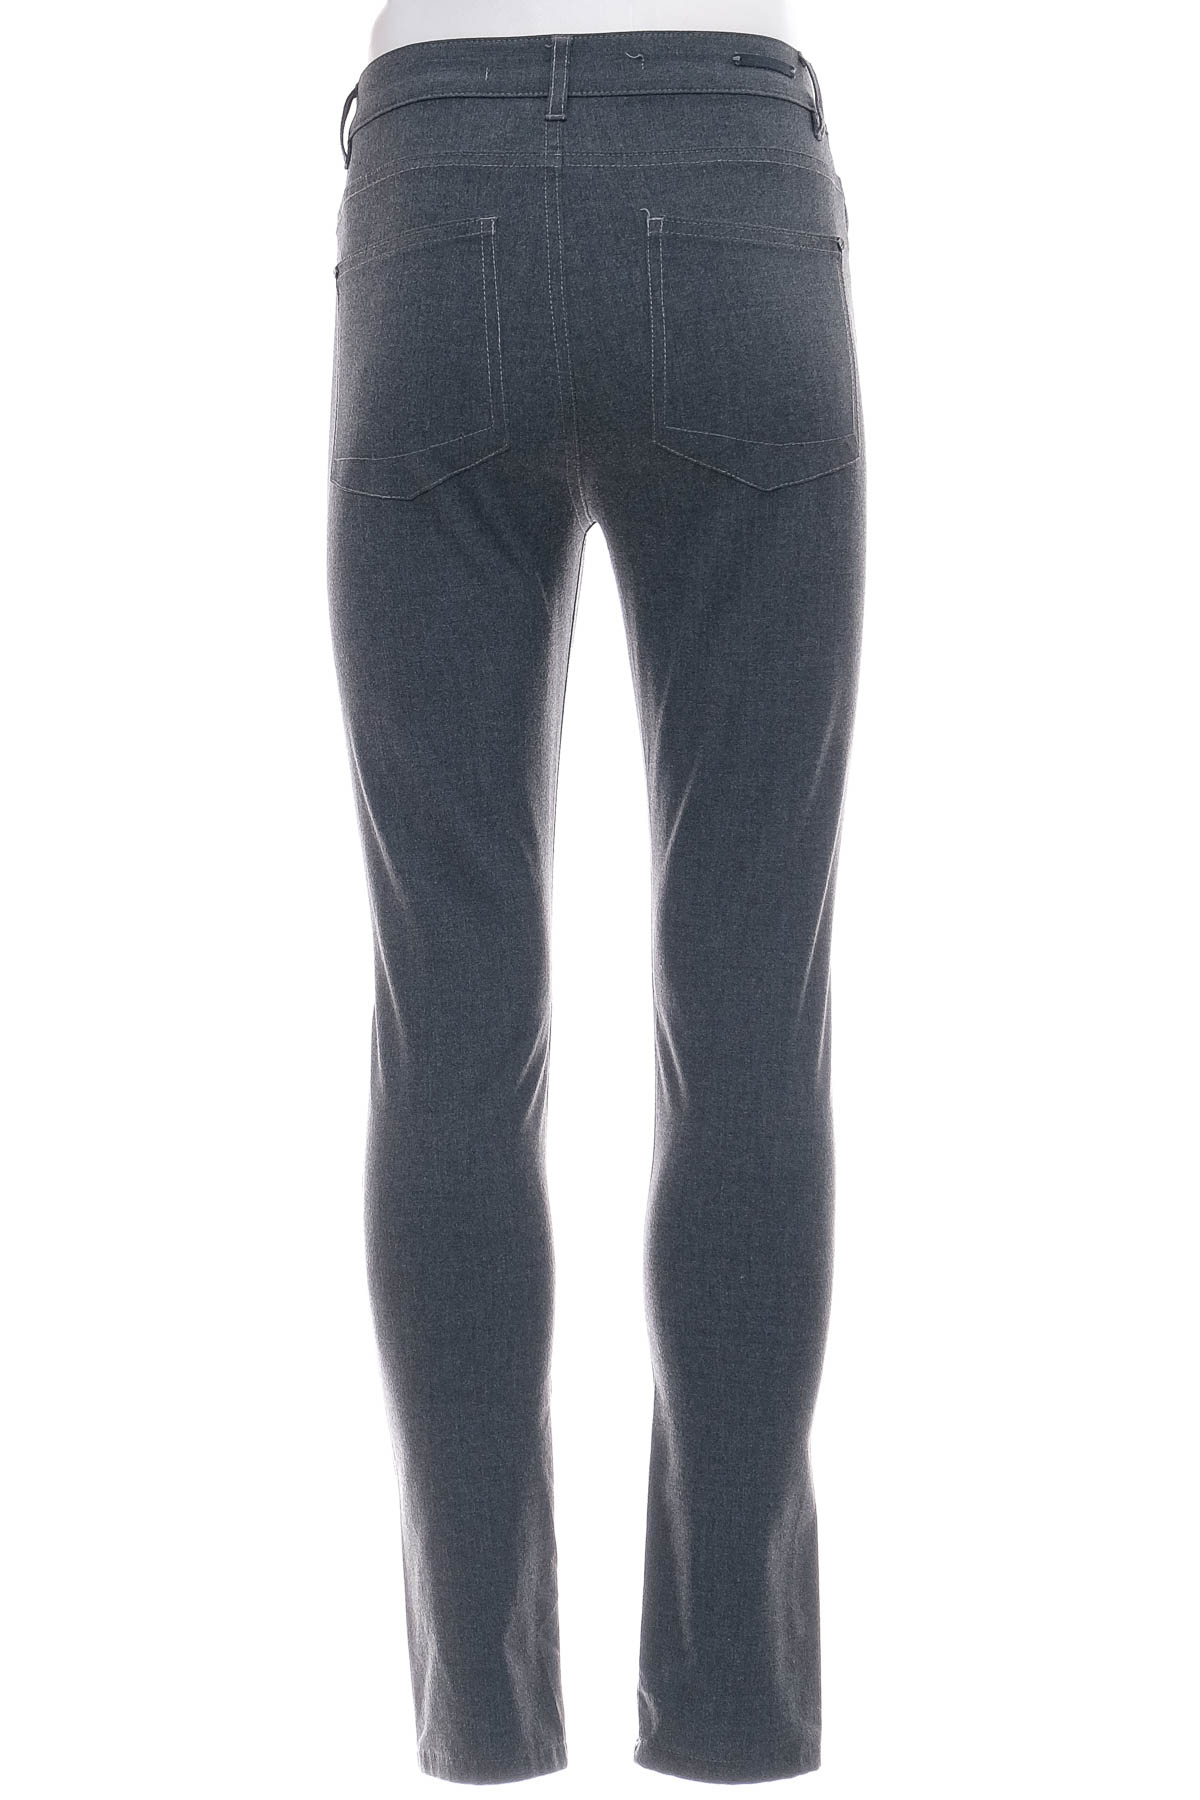 Pantalon pentru bărbați - ZARA Man - 1